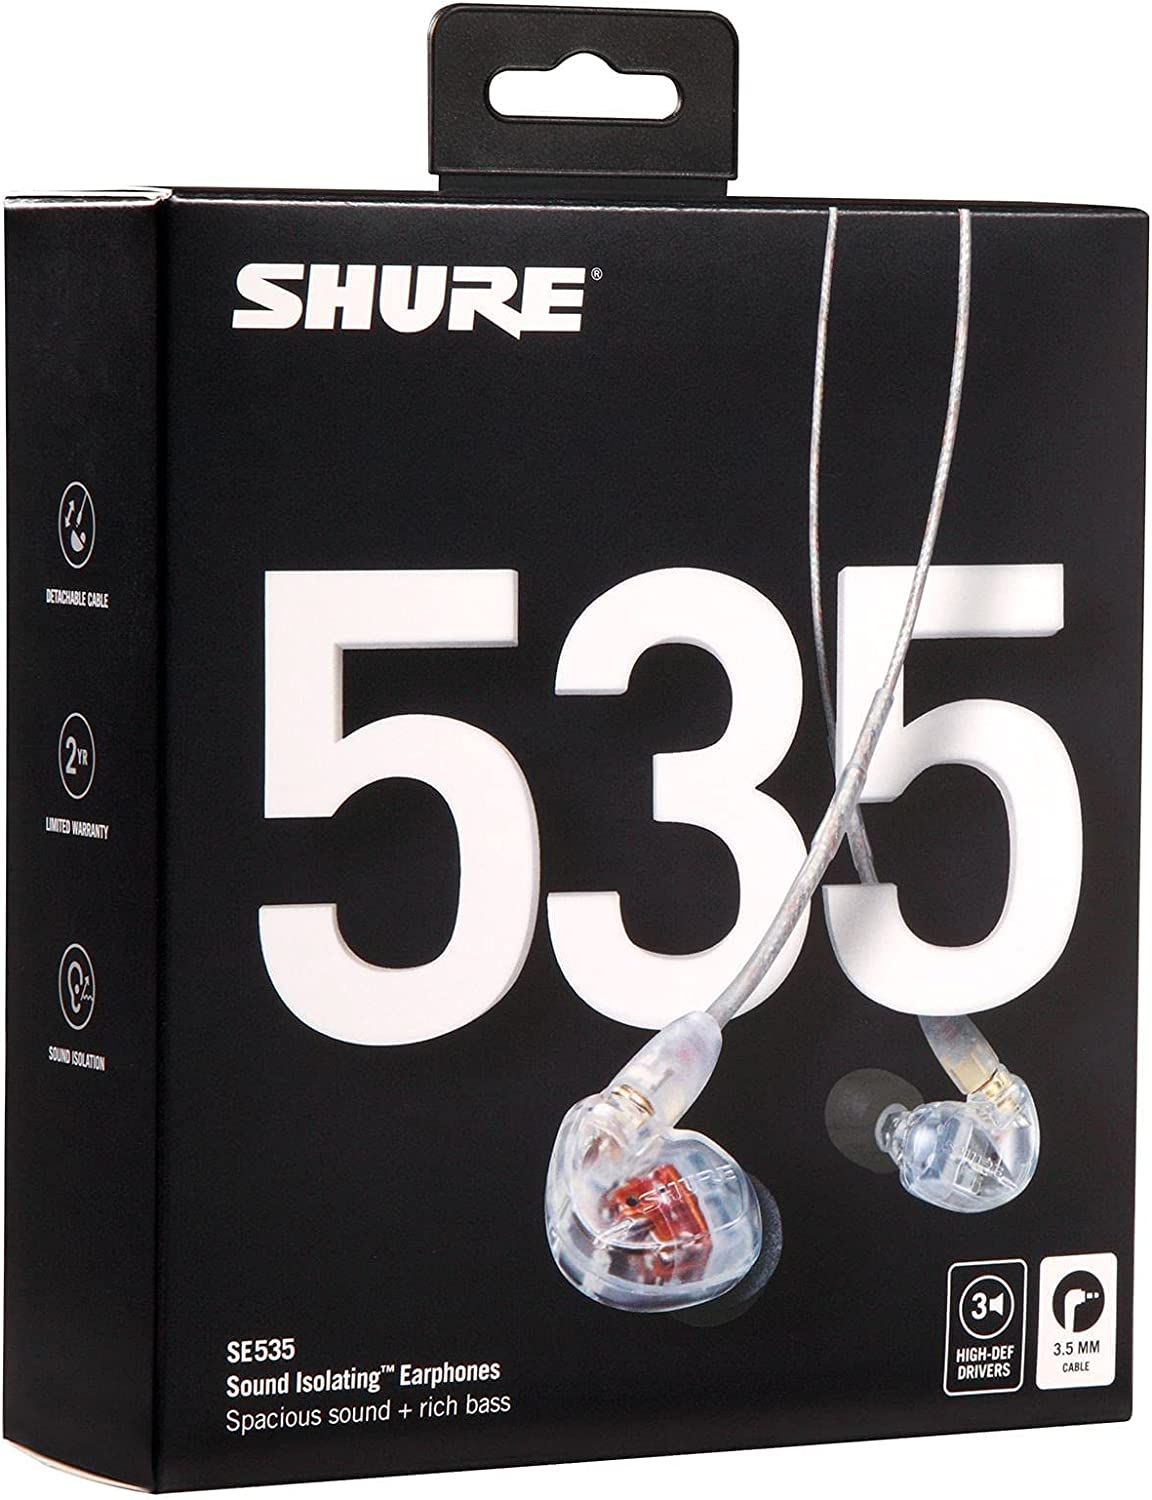 SHURE SE535 SOUND ISOLATING EARPHONES - CLEAR (SE535 /SE-535)